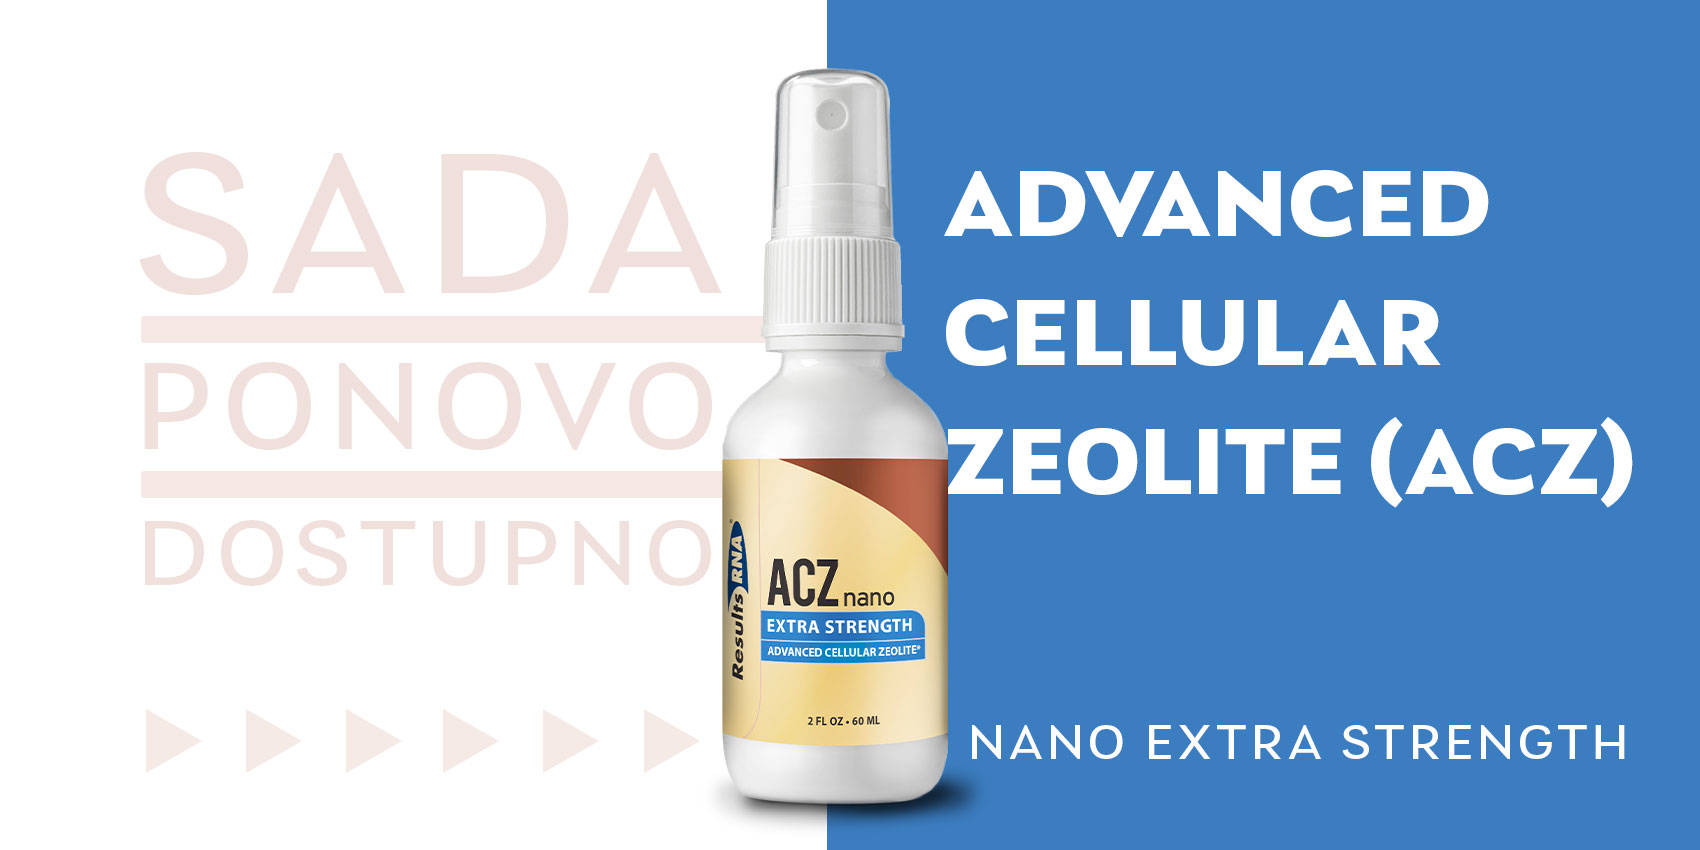 Advanced-cellular-zeolite-2